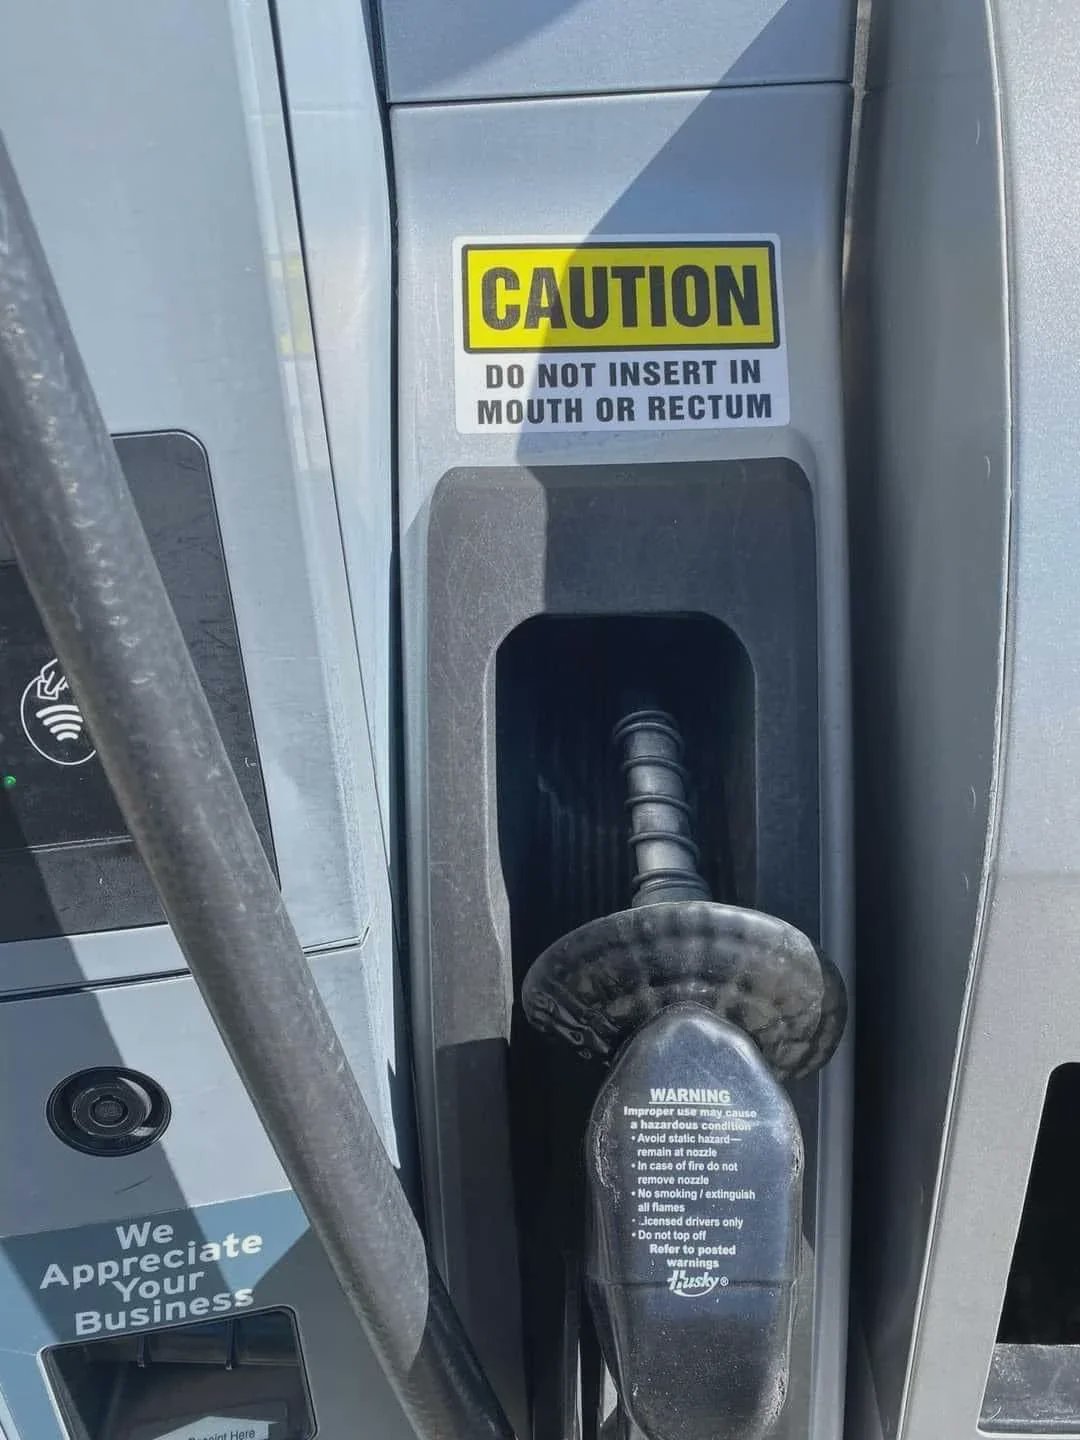 Caution sign gas station.jpg